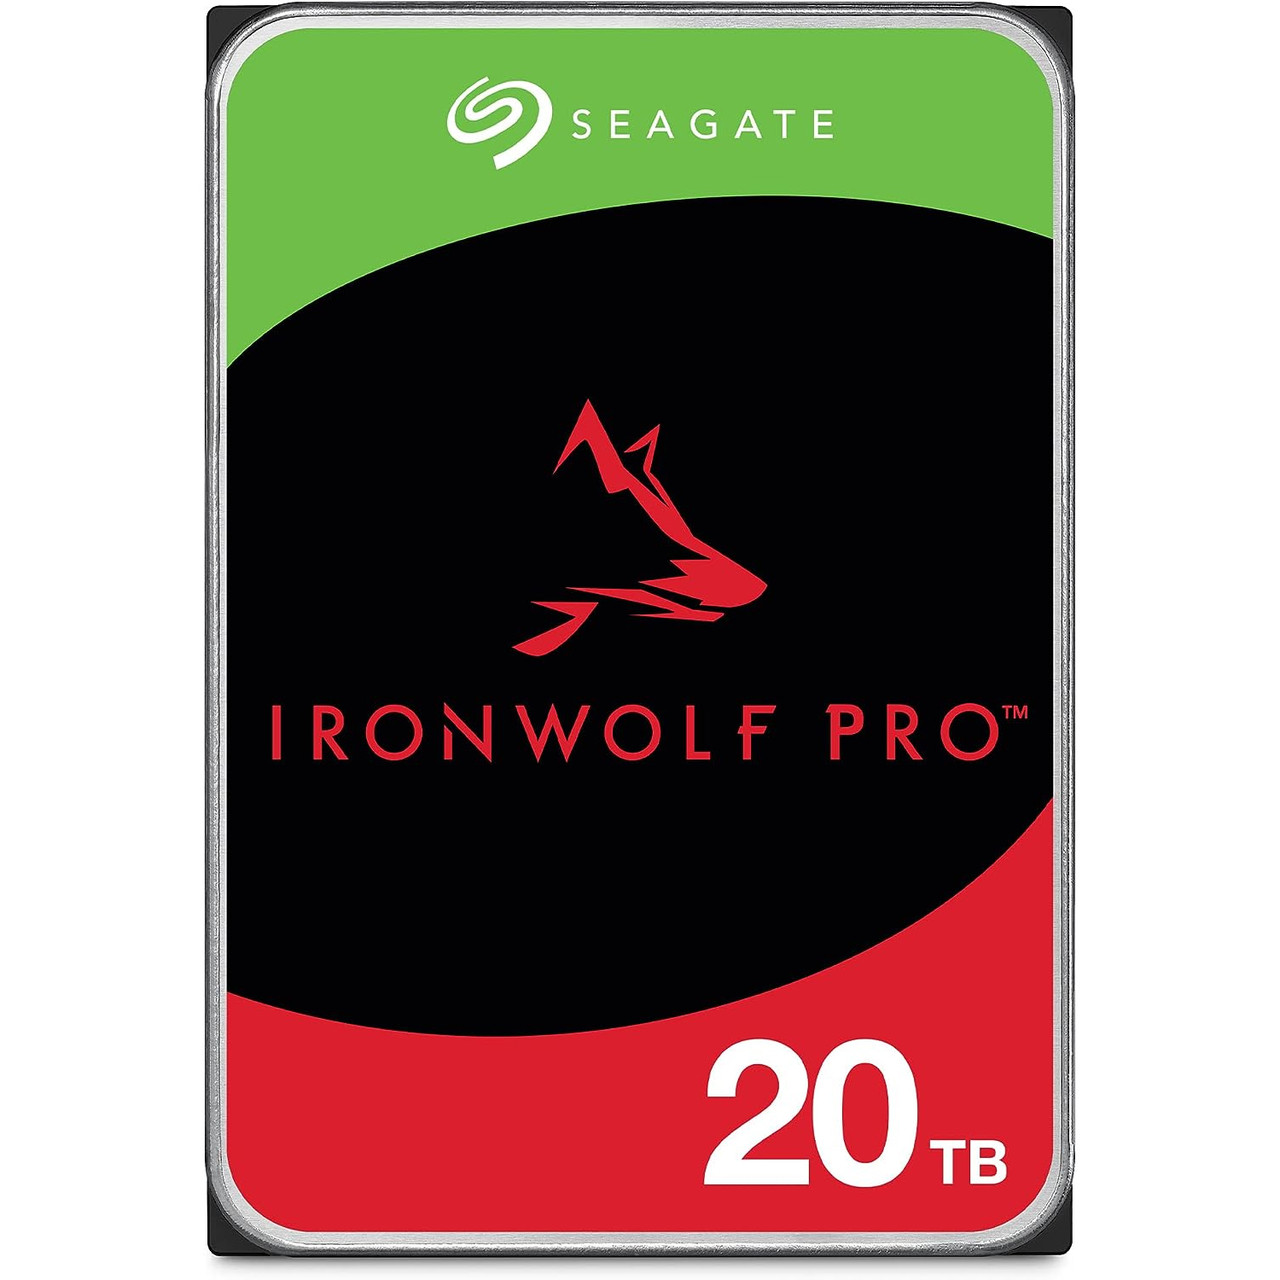 Seagate IronWolf Pro 20TB Enterprise NAS Internal Hard Drive 3.5" SATA 6Gb/s 7200RPM 256MB Cache HDD ST20000NT001